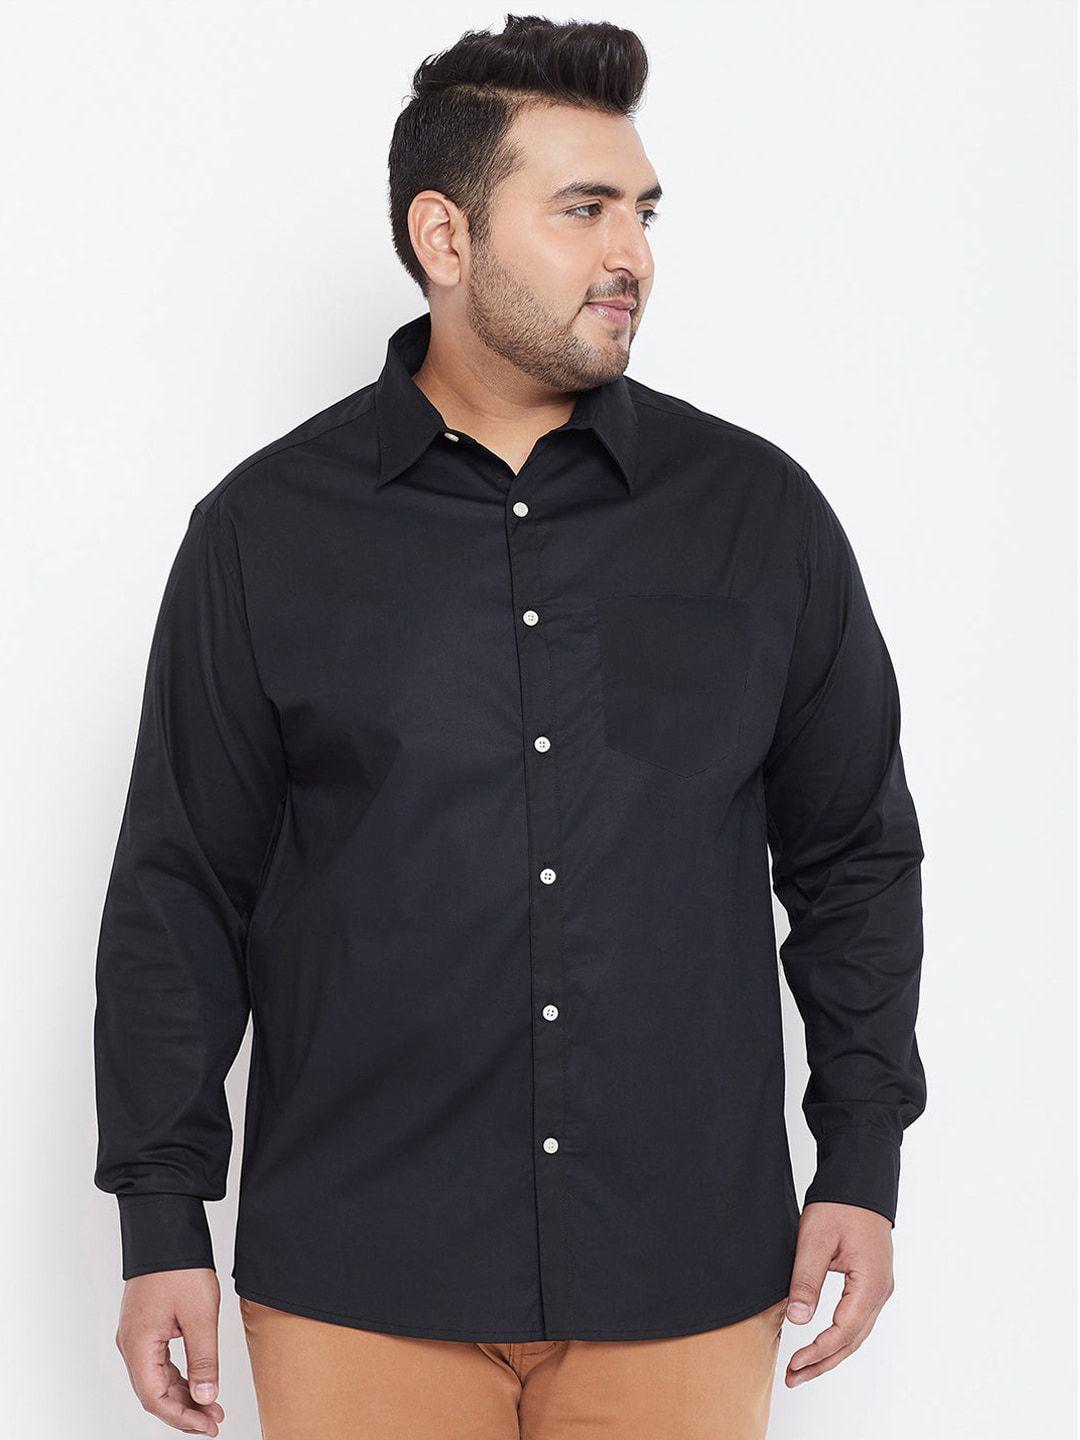 bigbanana men plus size solid black comfort casual shirt